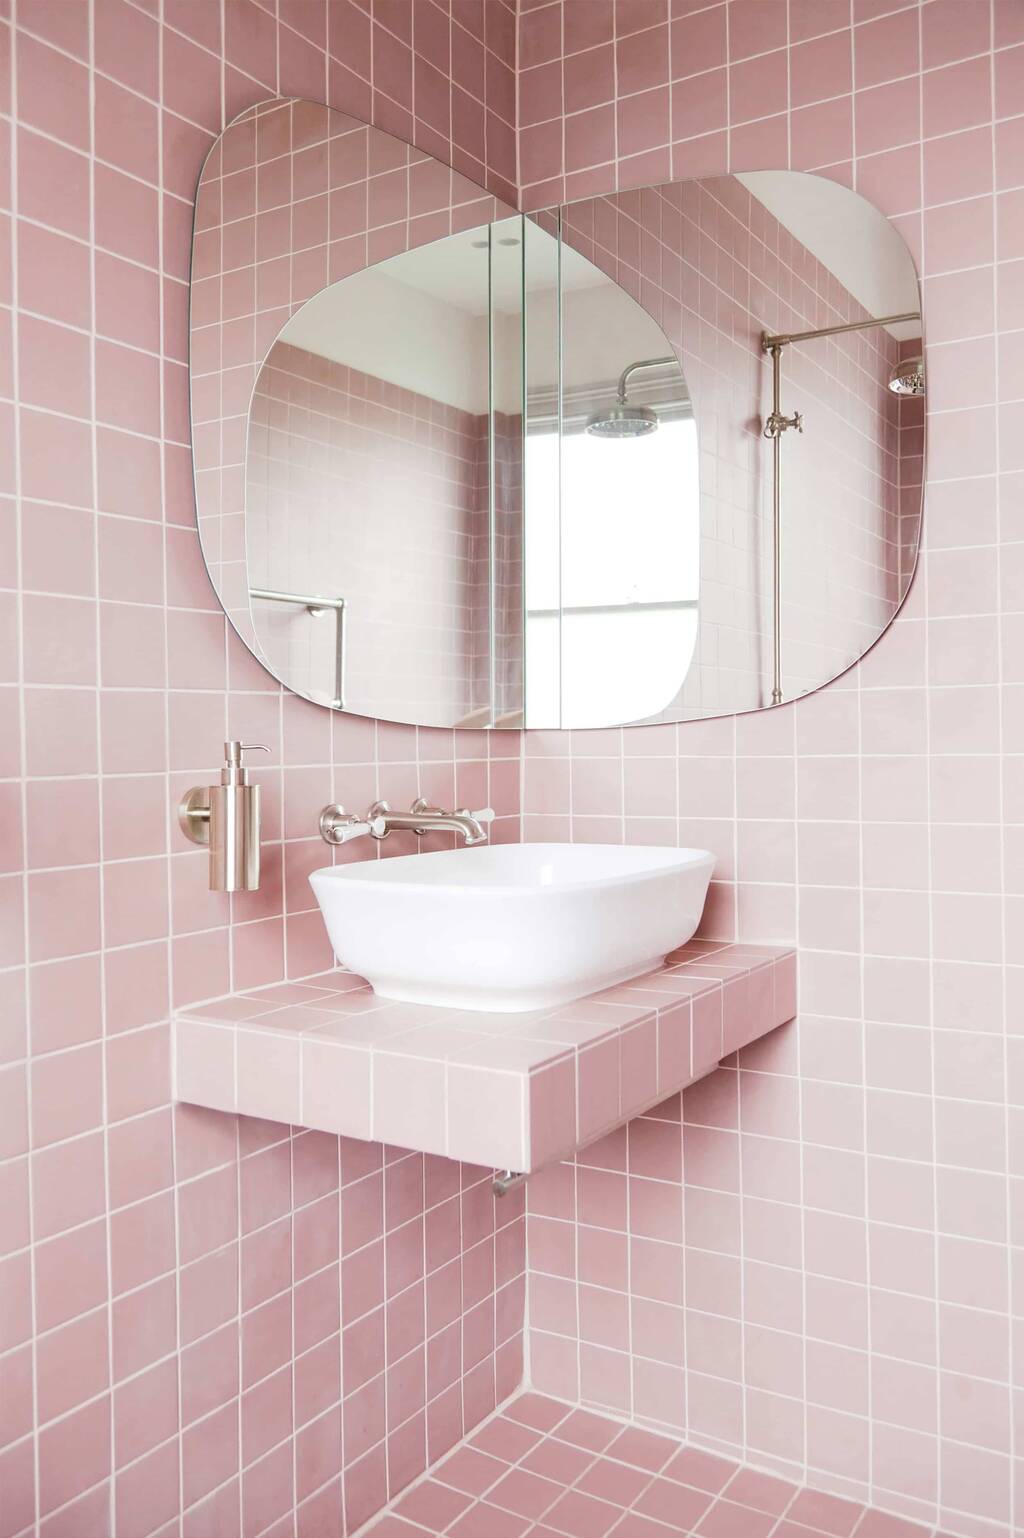 Bathroom Mirror Ideas 17 Reflective, Small Corner Bathroom Mirrors